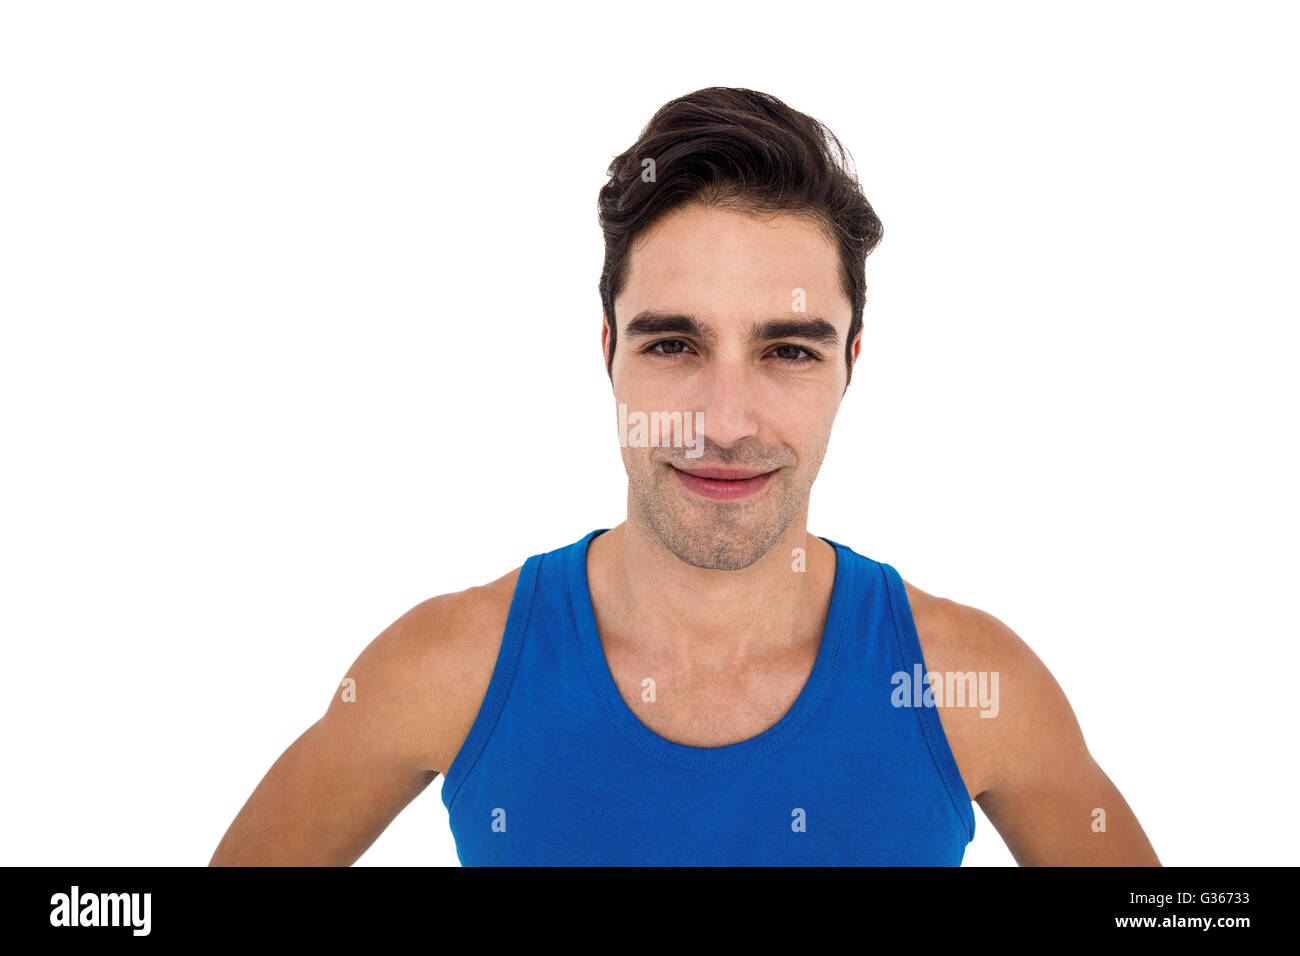 Male athlete posing on white background Stock Photo